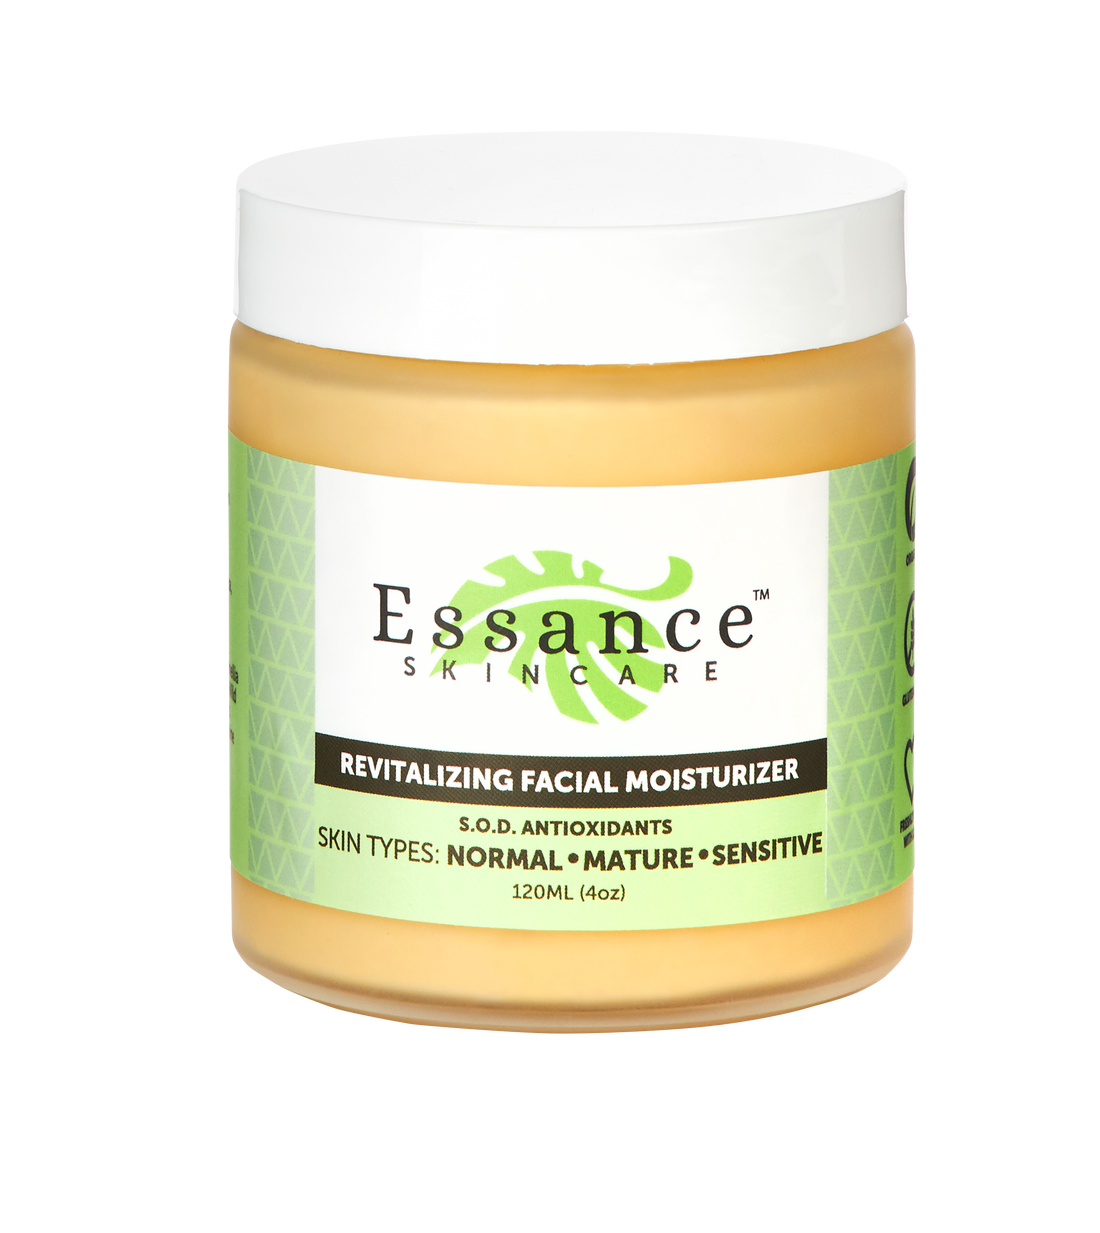 Essance Skincare - Revitalizing Facial Moisturizer